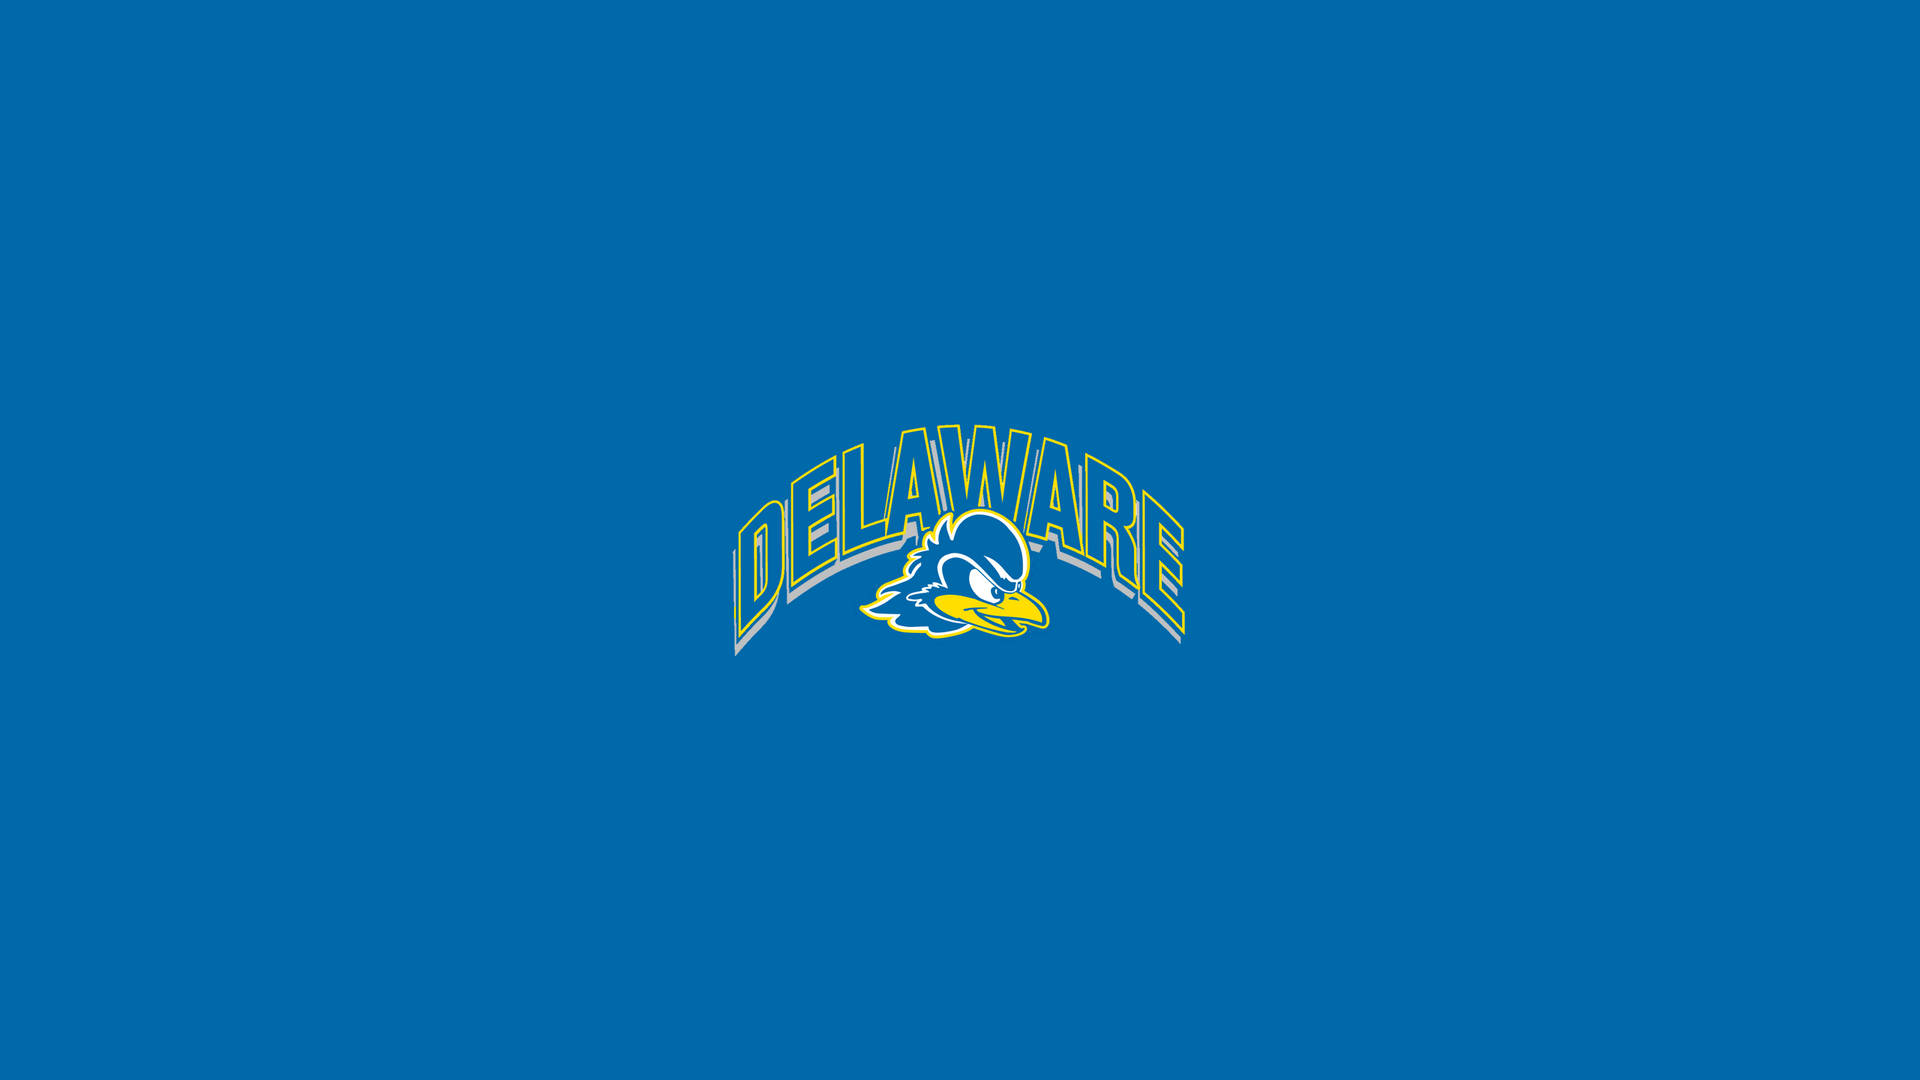 University of Delaware's Iconic Emblem Wallpaper